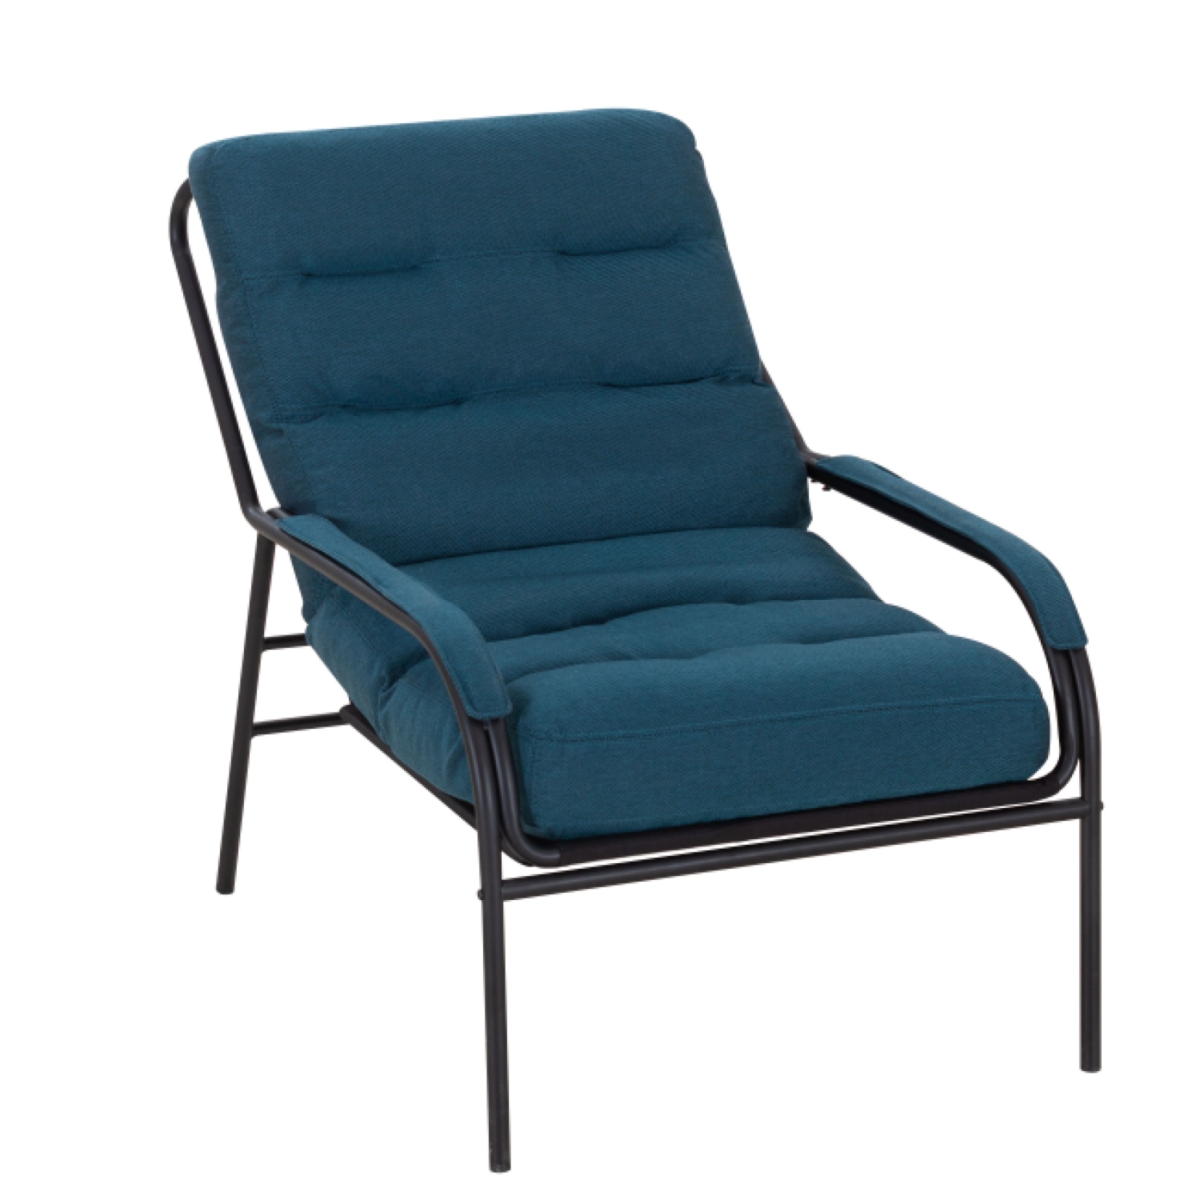 Simplie Fun Lounge Recliner Chair Leisure Chair Studio Chairs Iron Arm Club Chair With Metal Legs Moveable Cushi In Turquoise,aqua